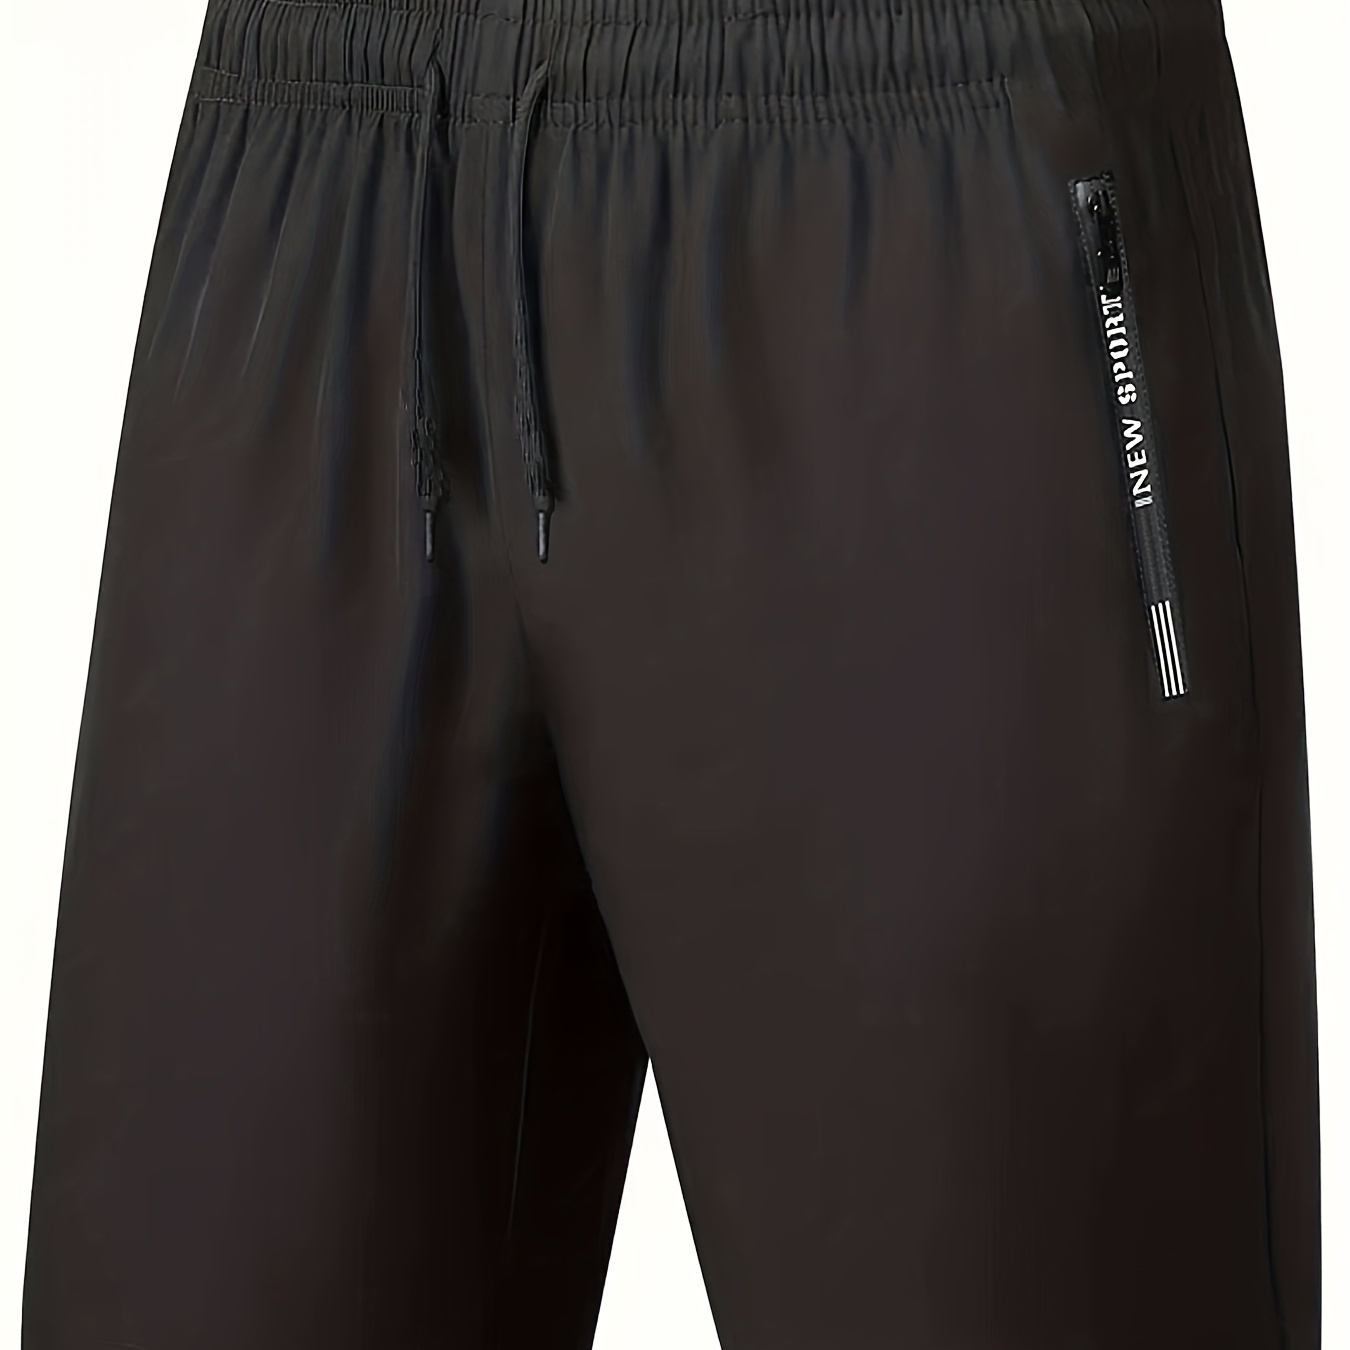 

Zipper Pockets Comfy Shorts, Men's Casual Solid Color Slightly Stretch Elastic Waist Drawstring Shorts For Summer